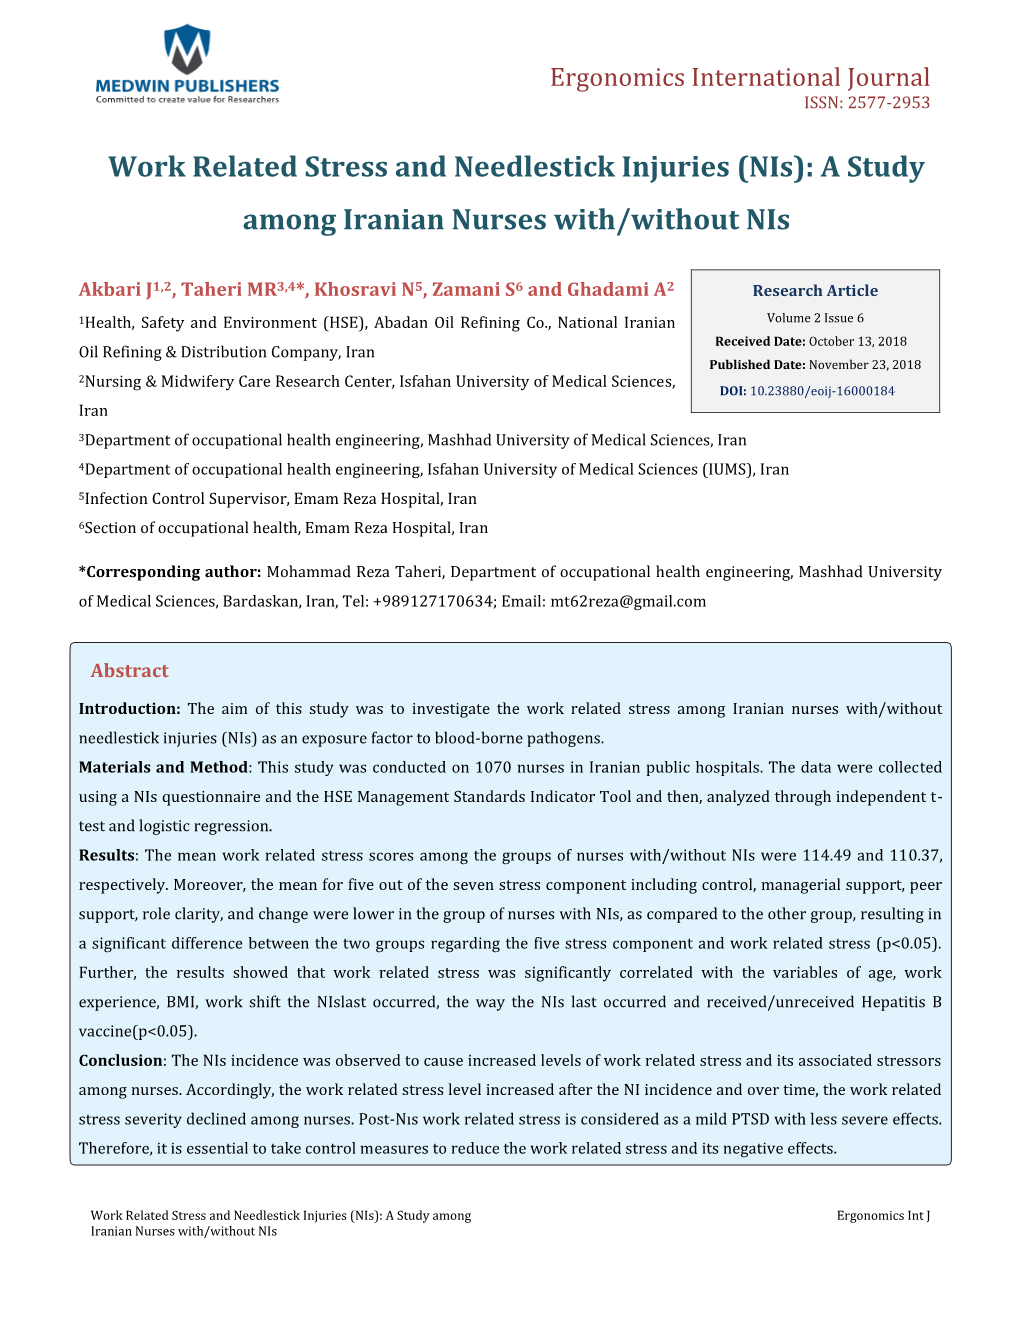 Taheri MR, Et Al. Work Related Stress and Needlestick Injuries (Nis): a Study Among Copyright© Taheri MR, Et Al